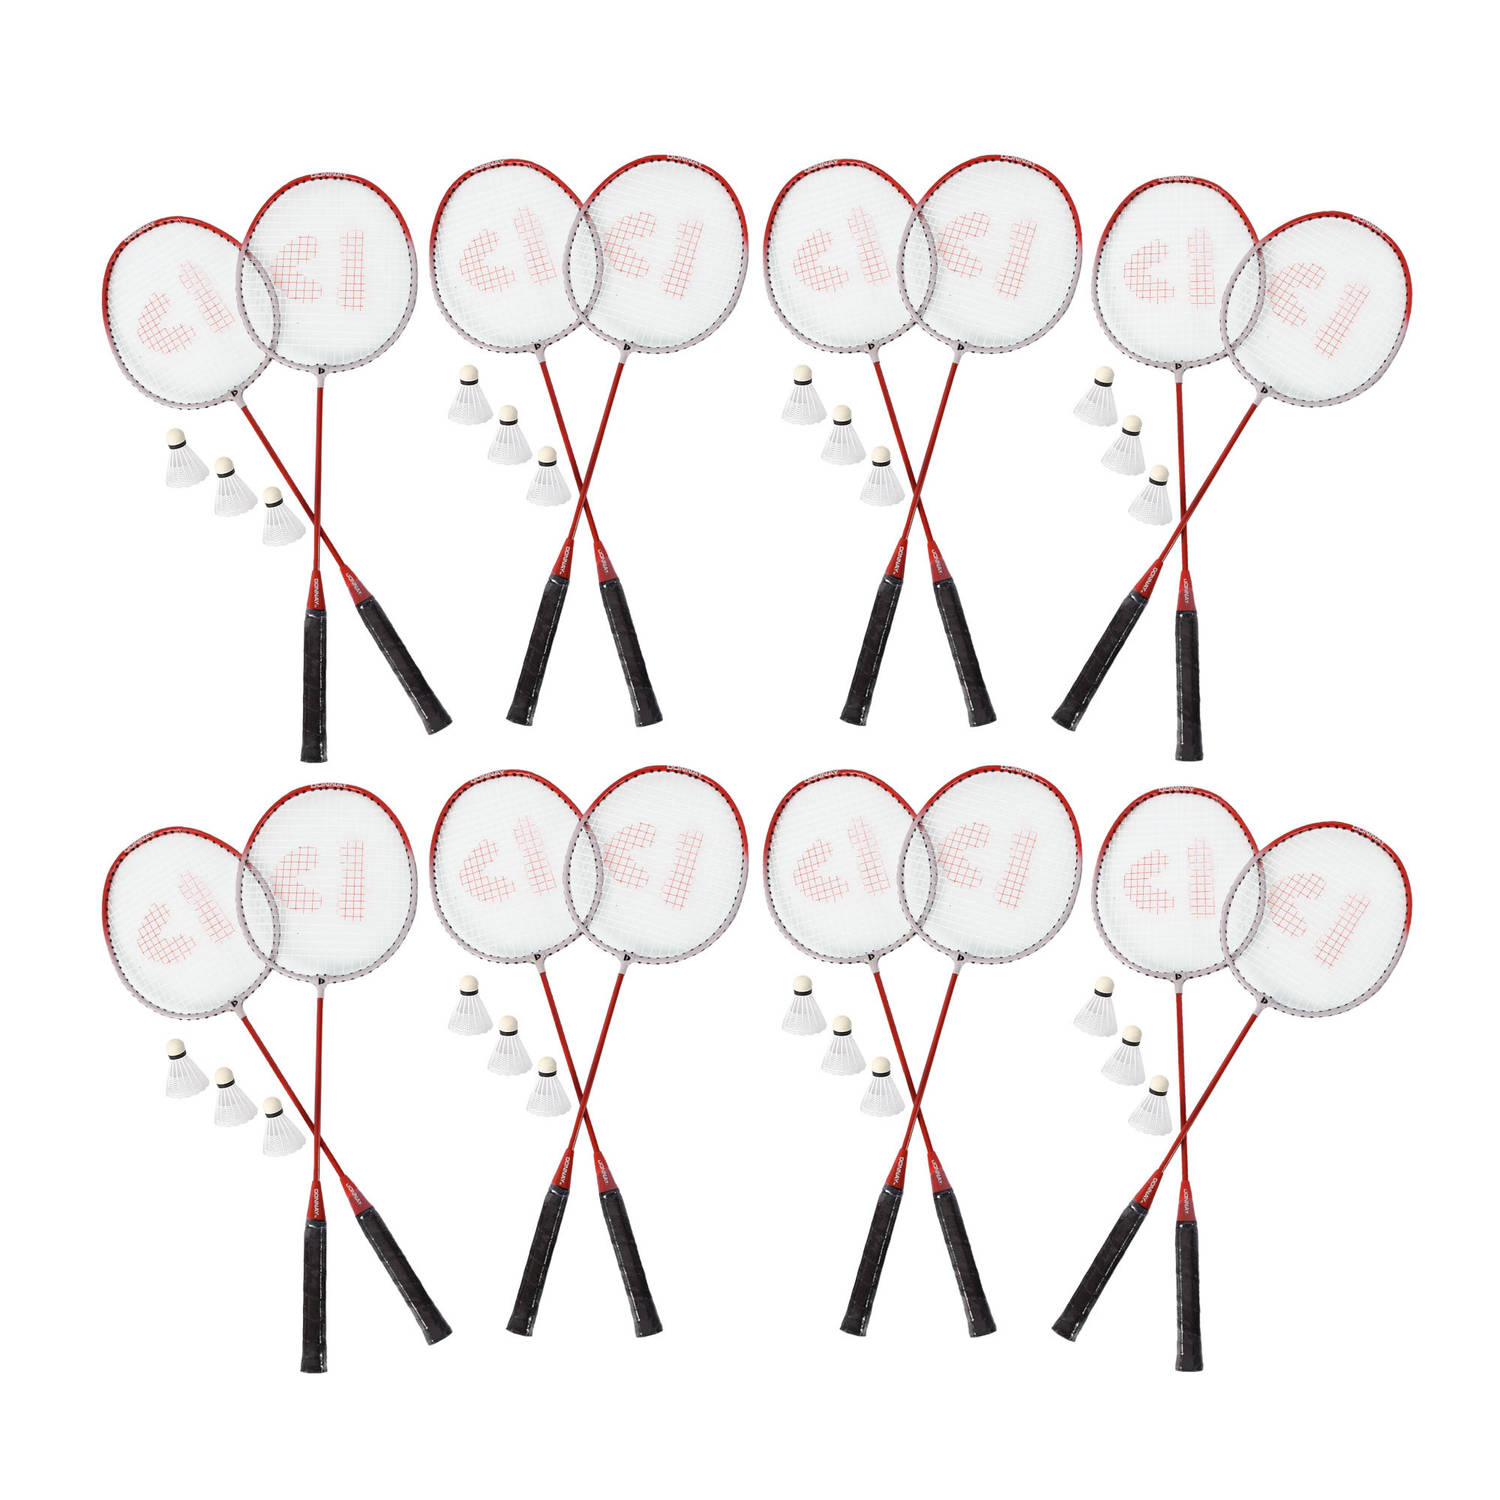 Voordelpak: Set van 8 Ultimate Badmintonset | 16x Aluminium Badminton Rackets | 24x Bio Plastic Shuttles | Geel | Inclusief Draagtas met elke Set